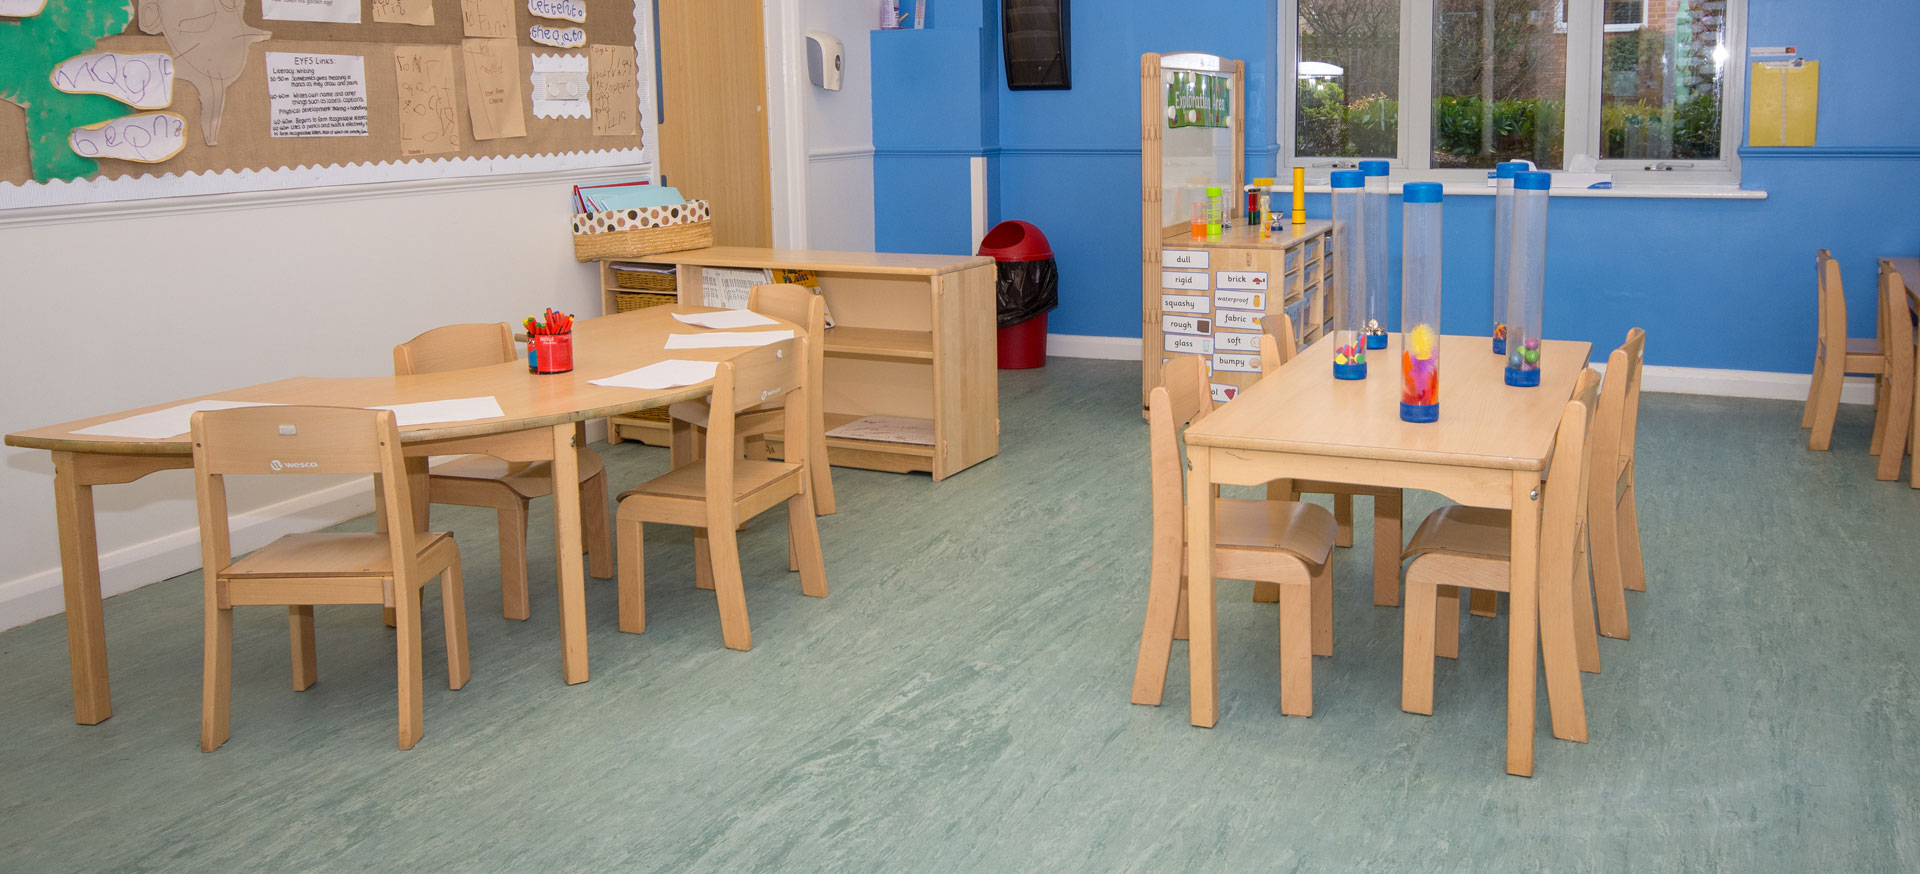 Bury St Edmunds Day Nursery and Preschool